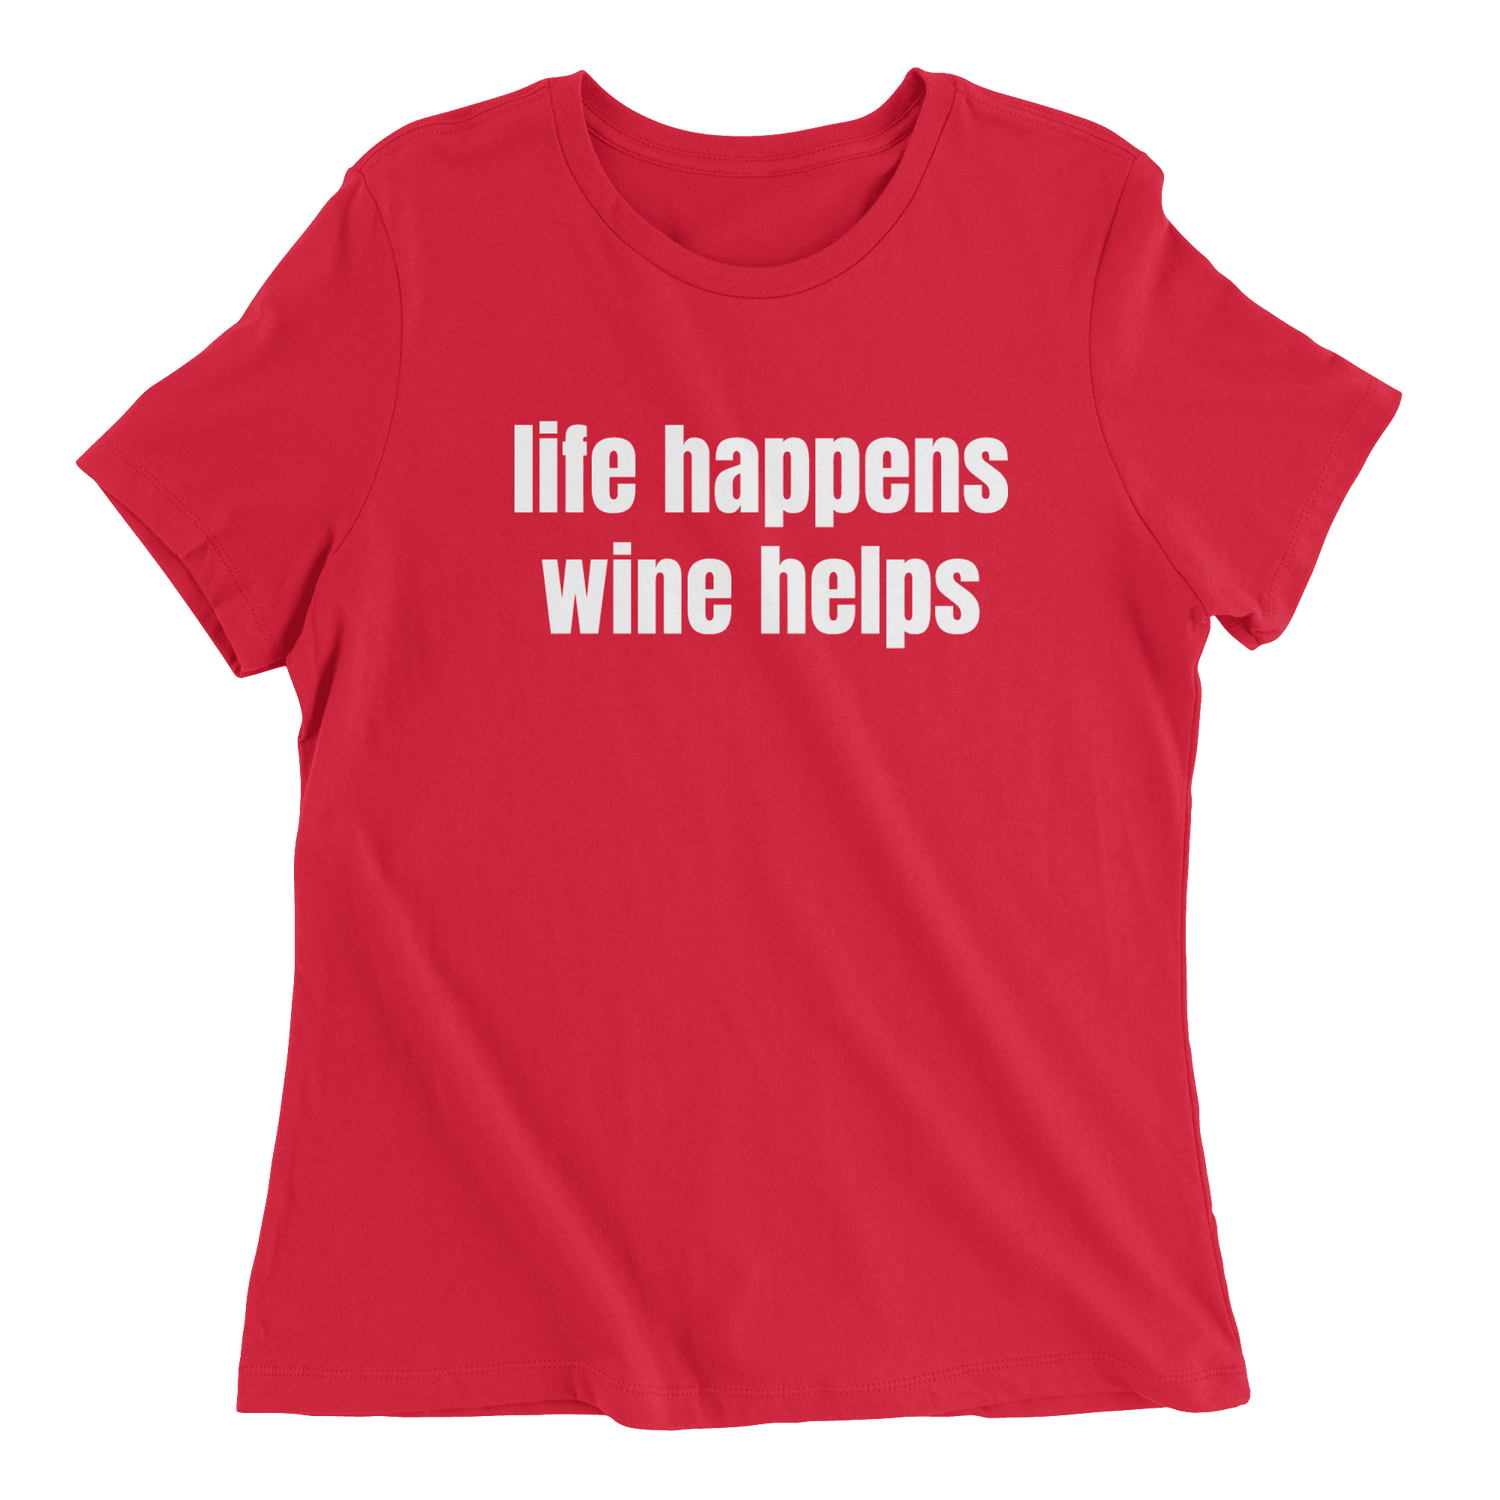 Life Happens Wine Helps - The T-Shirt Deli, Co.